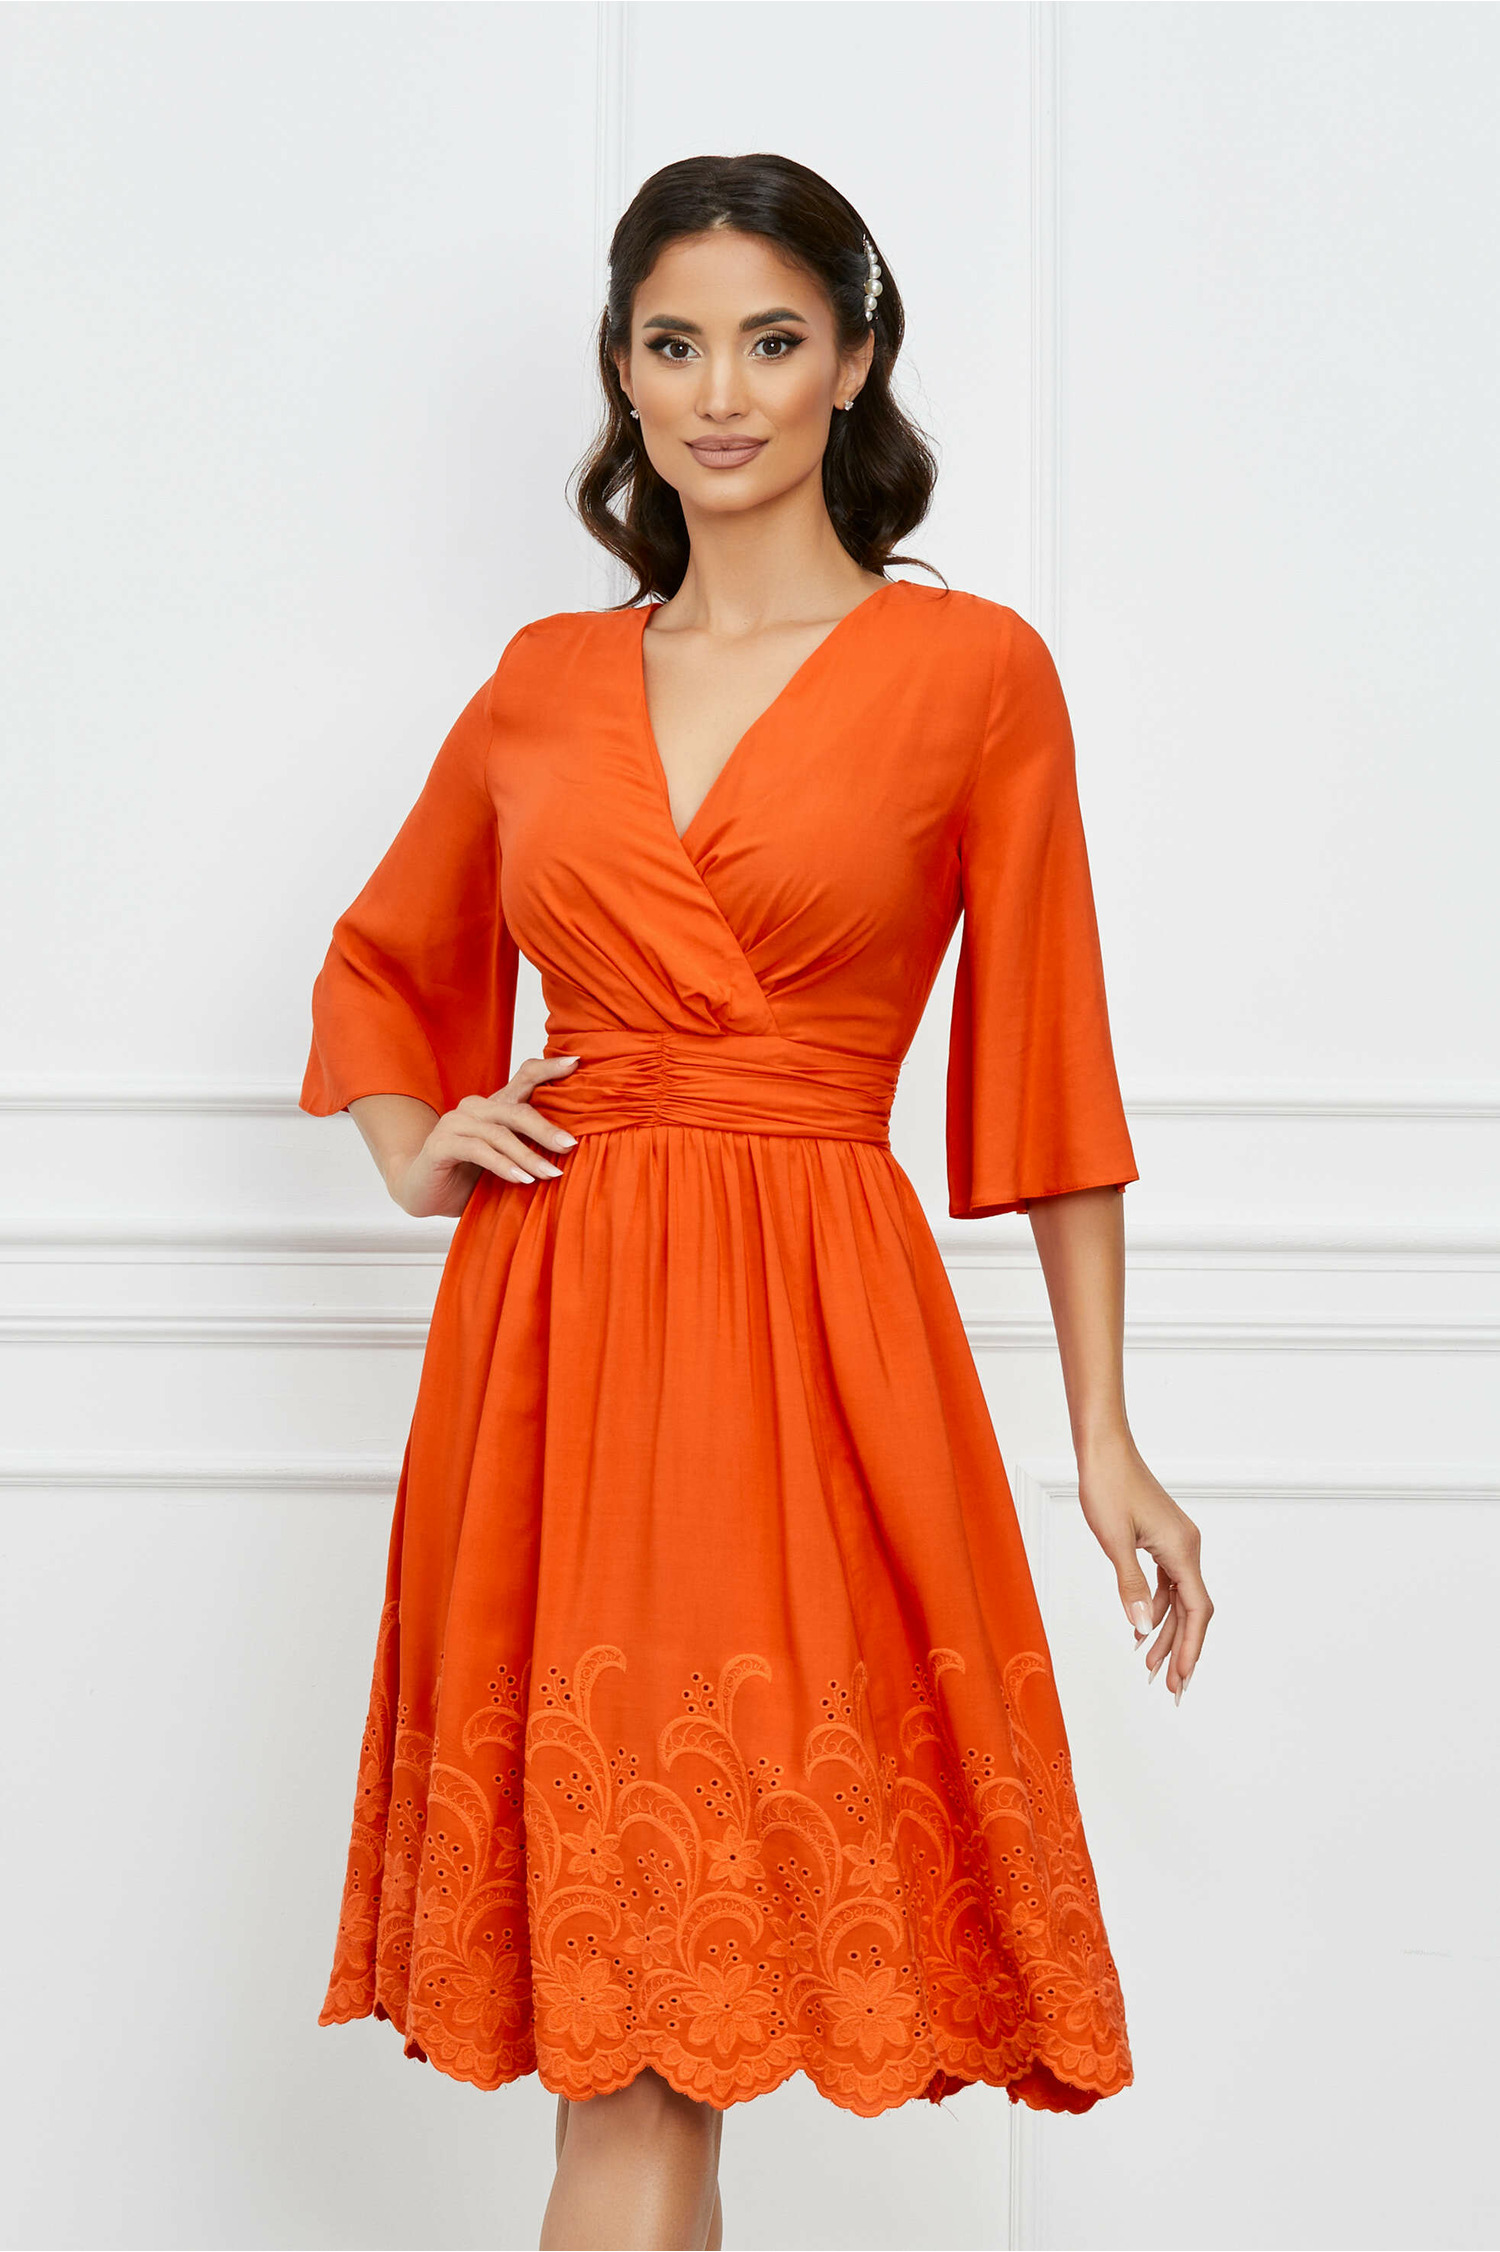 Rochie Dy Fashion orange cu motive florale la baza